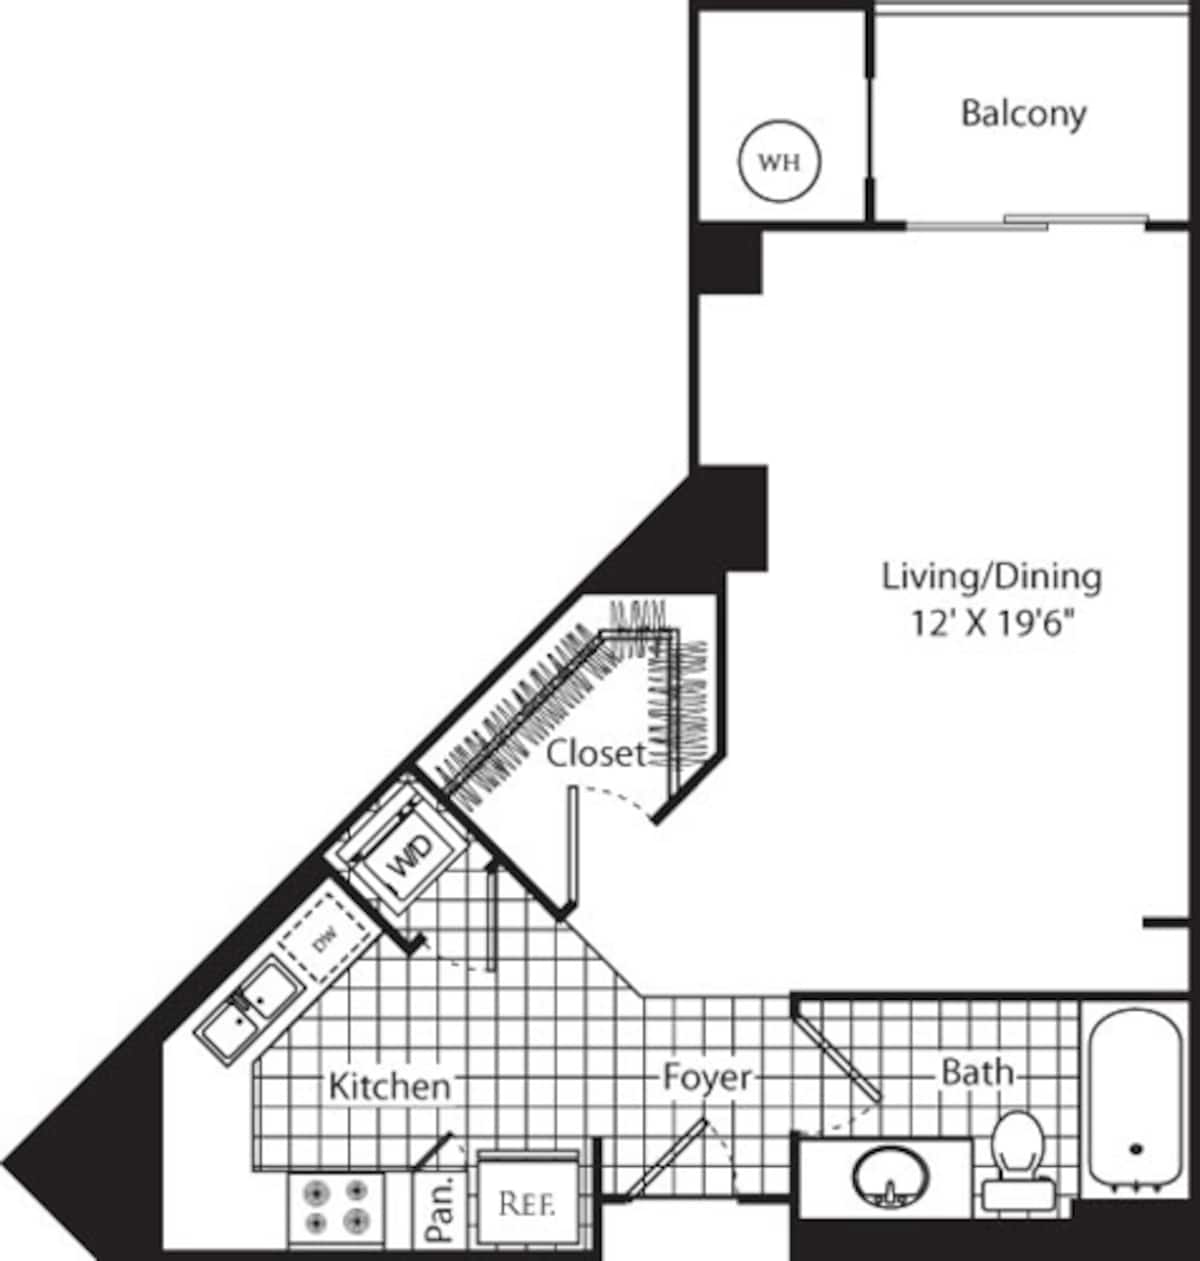 Floorplan diagram for A3, showing Studio